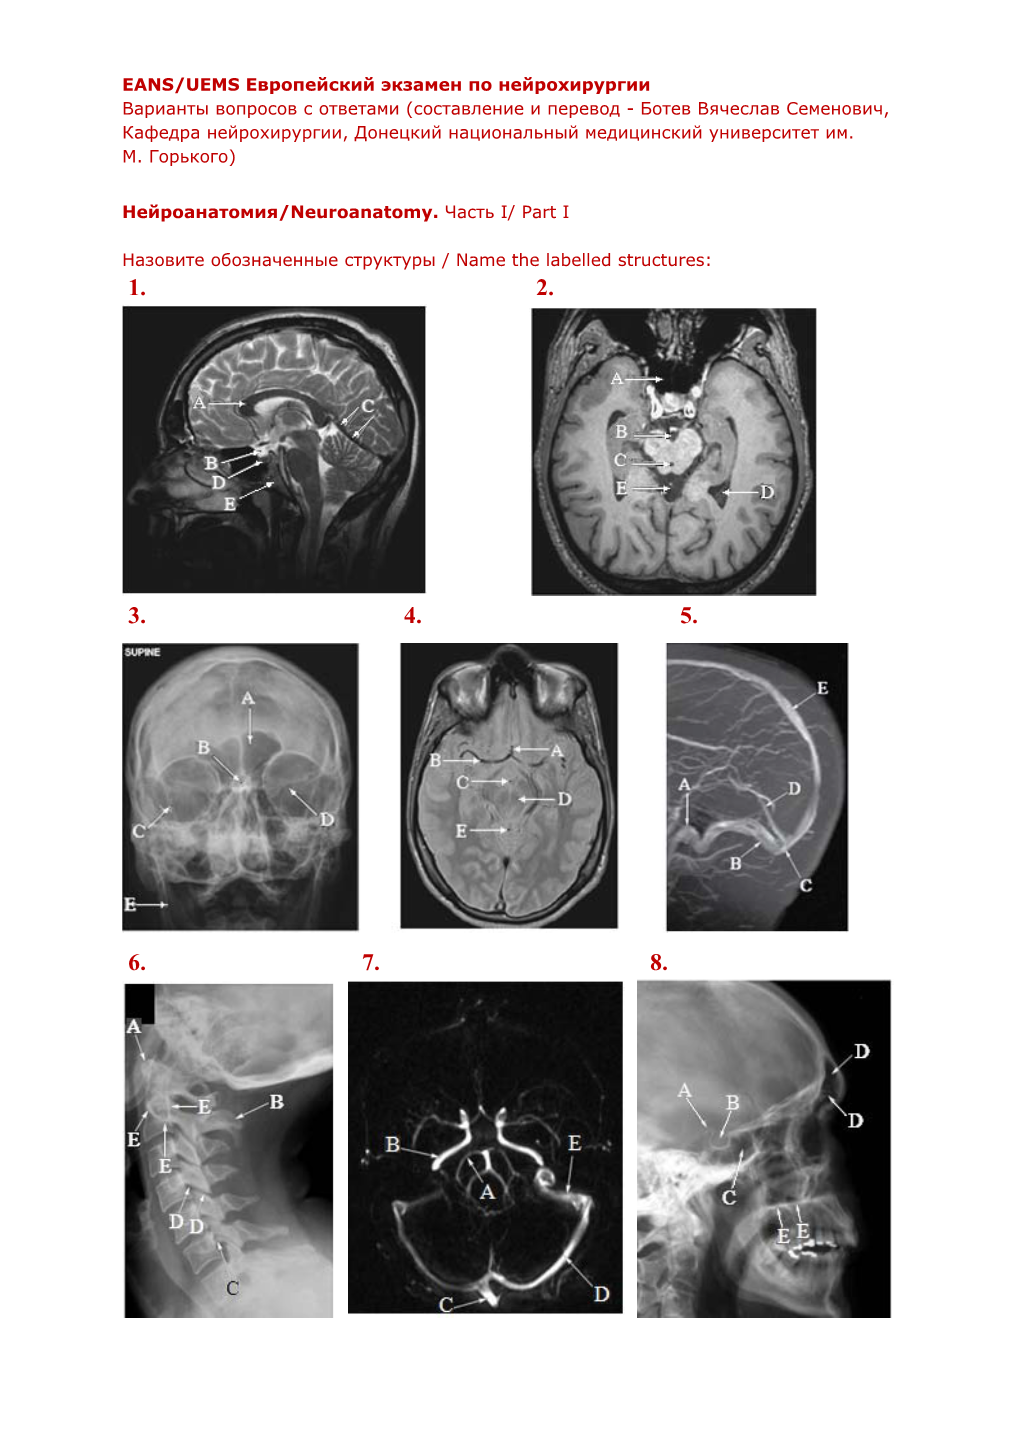 Нейроанатомия/Neuroanatomy